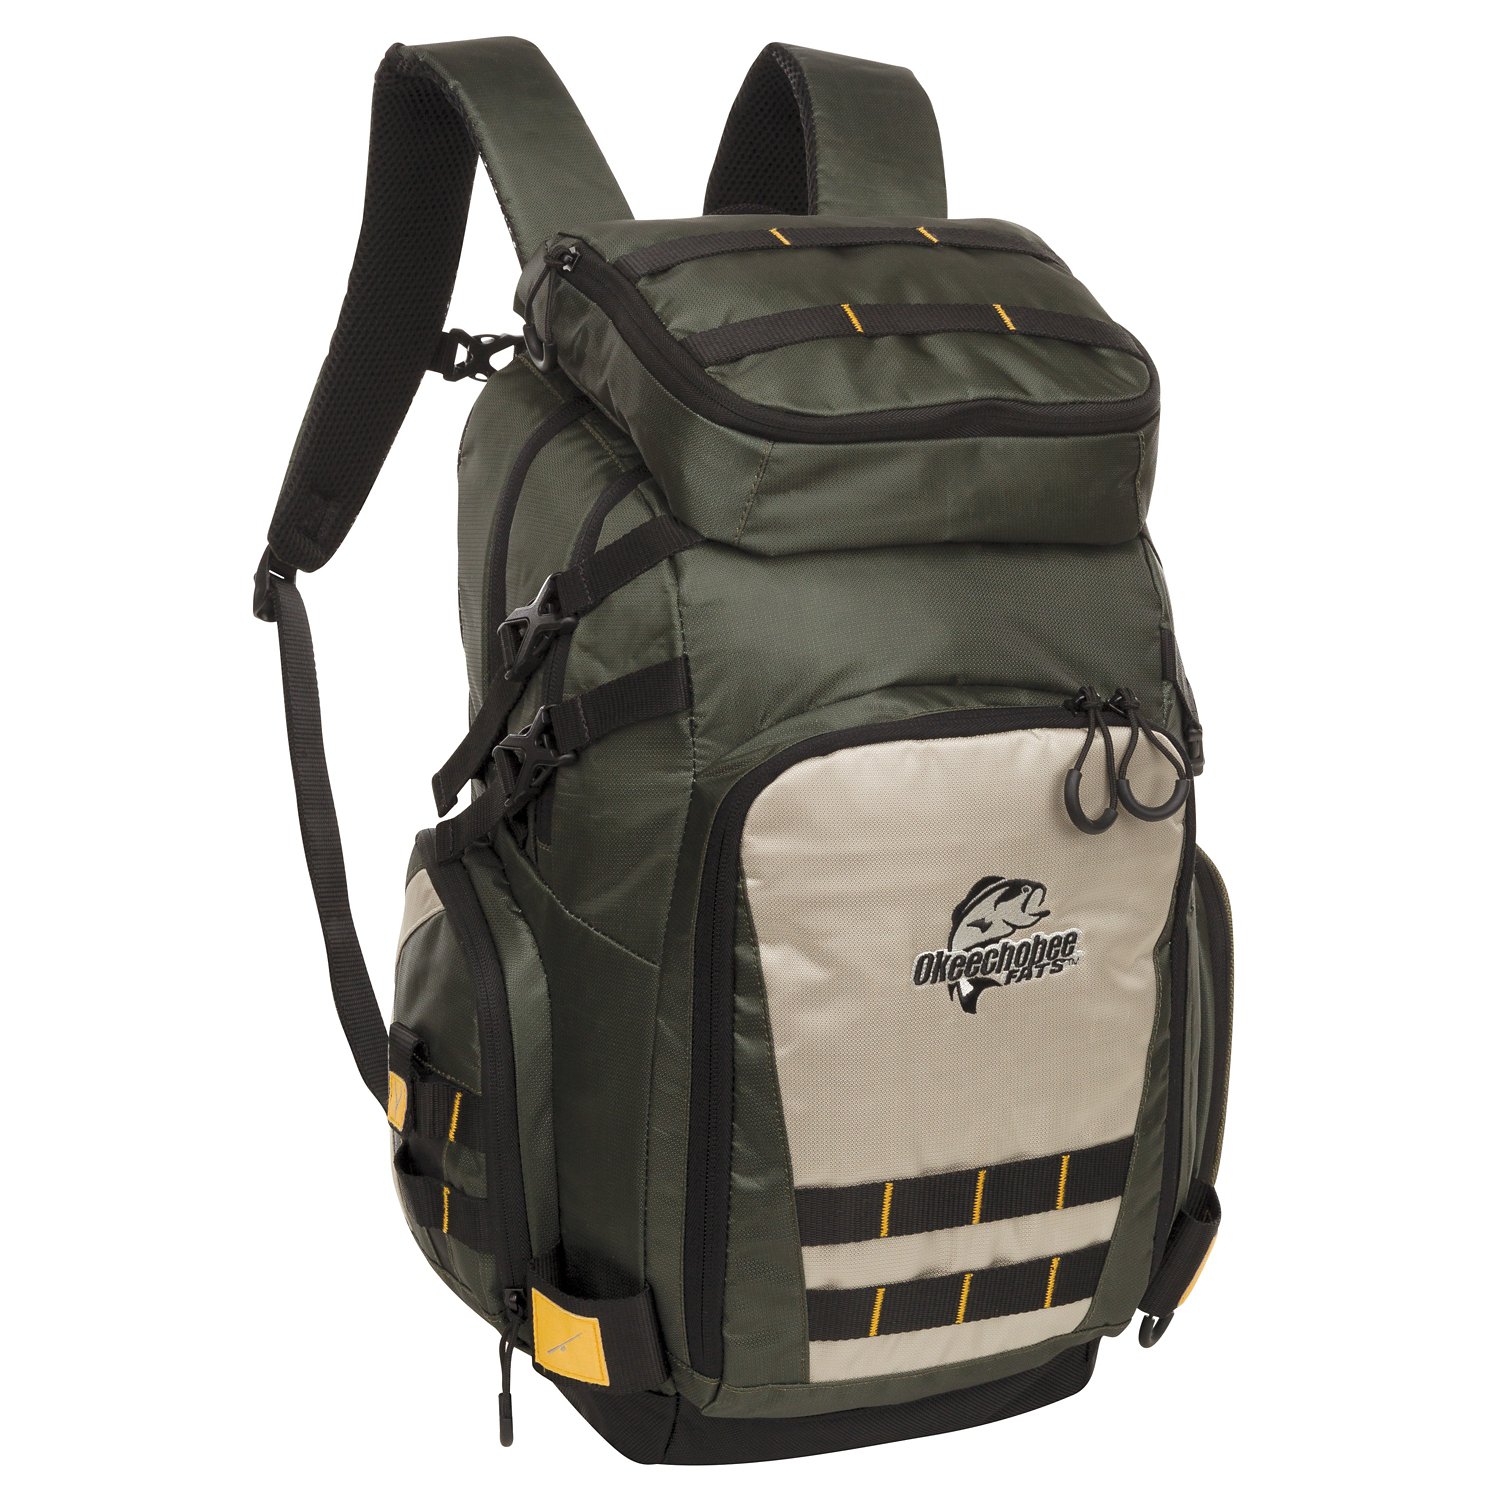 Okeechobee Fats Backpack | Free Shipping at Academy